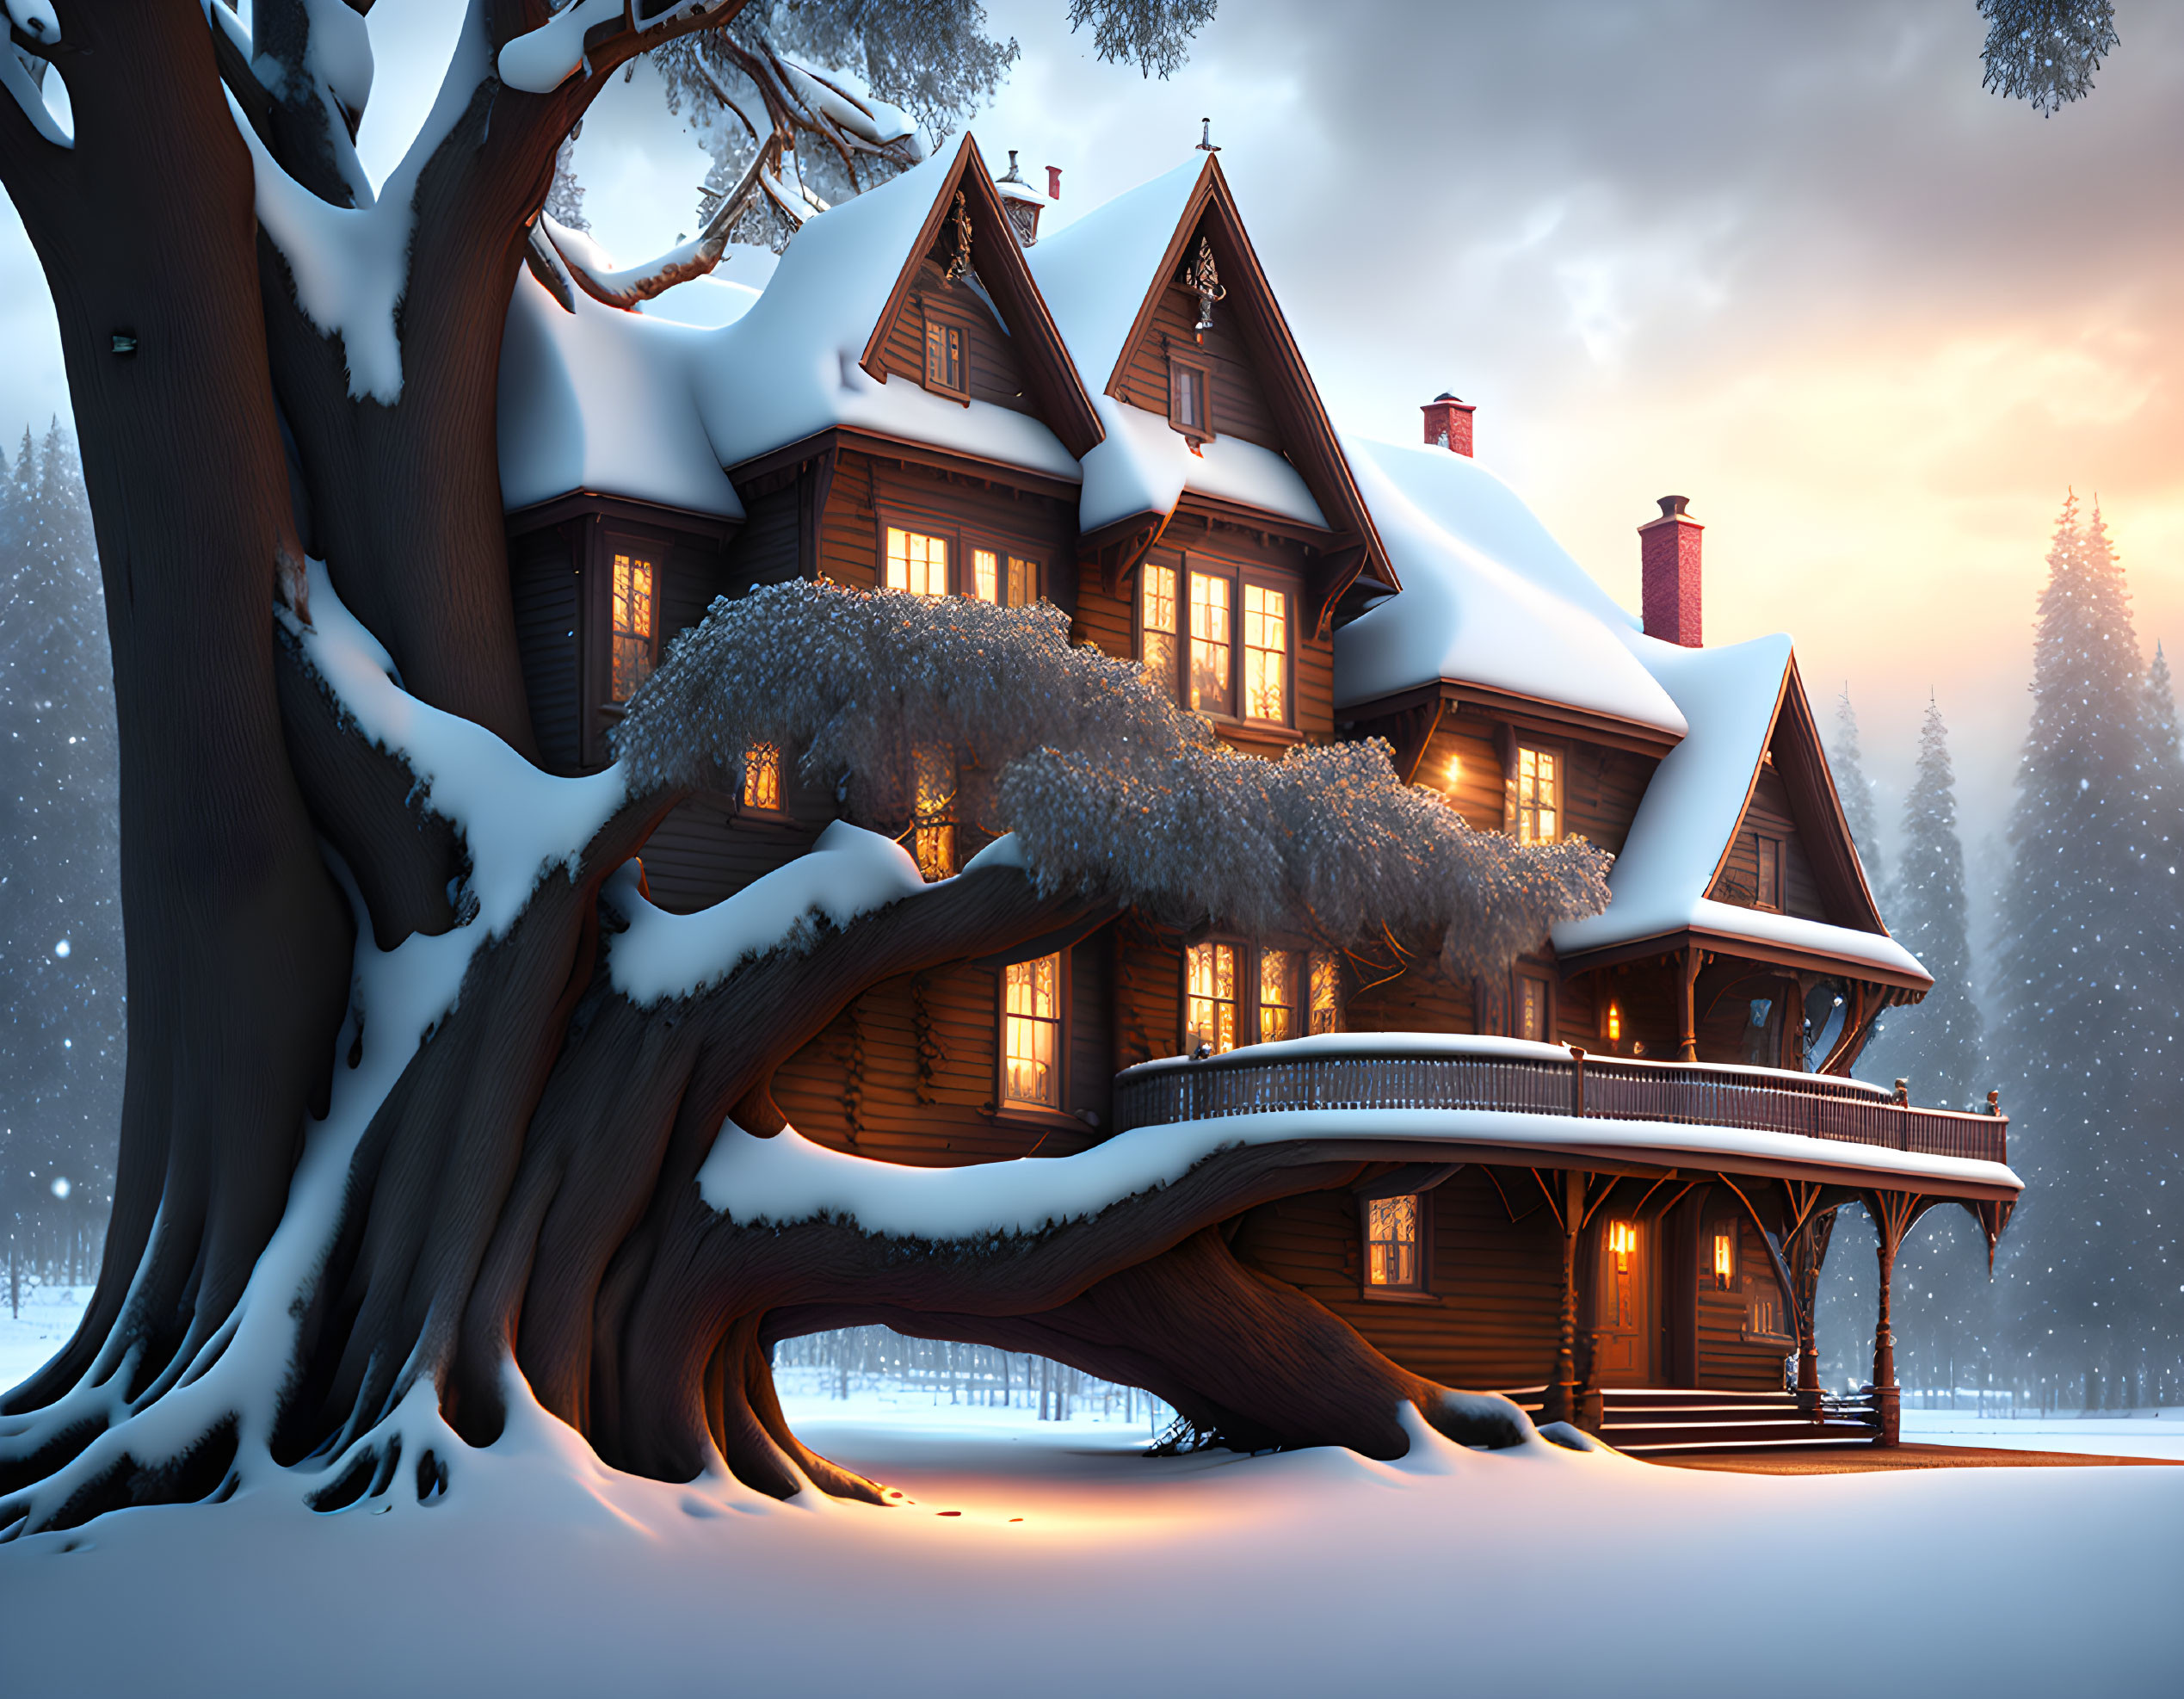 Cozy wooden cabin in snowy landscape at dusk